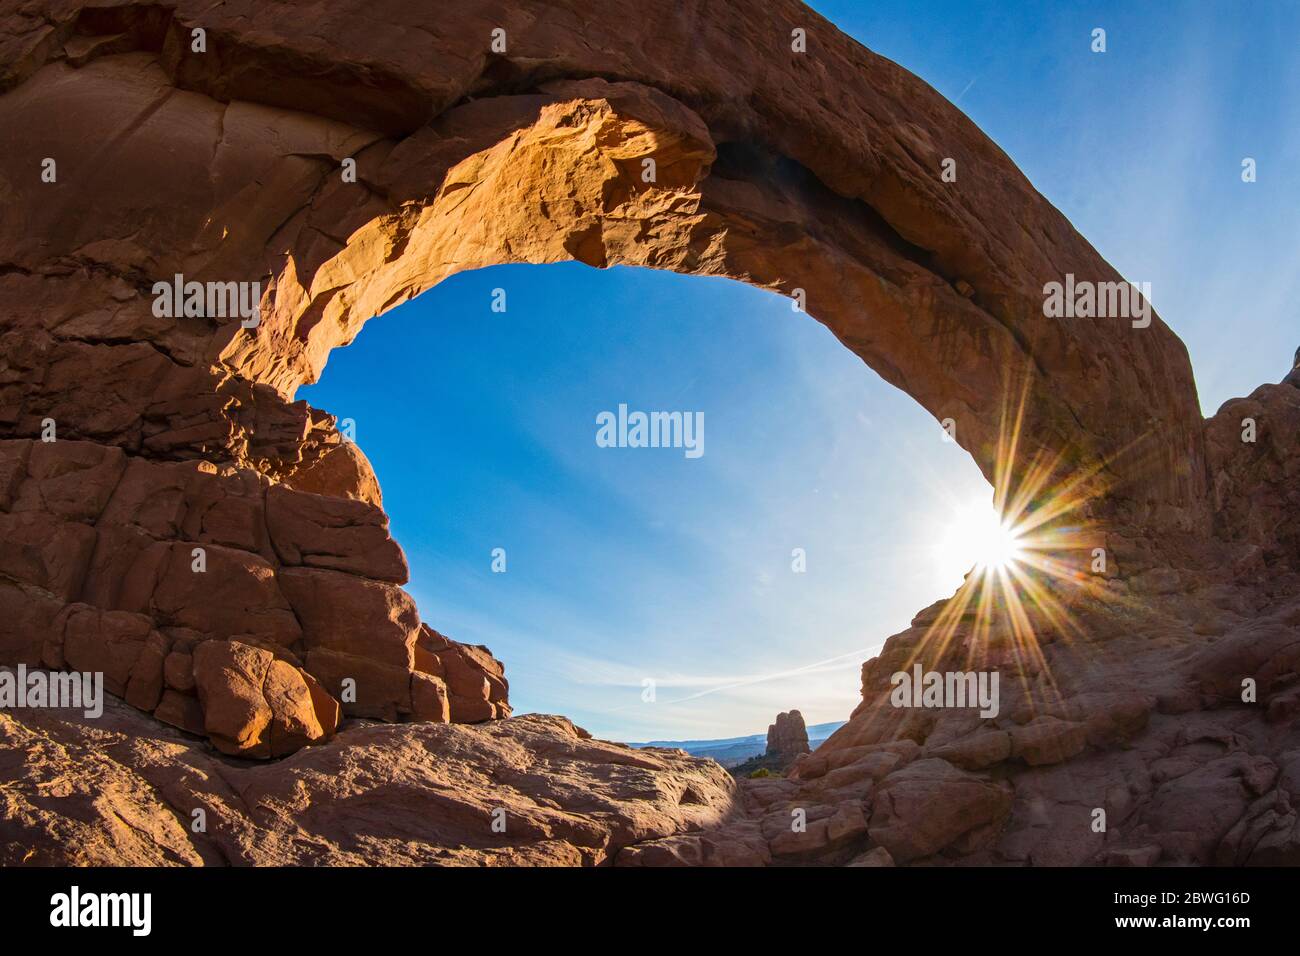 Natürliche Erzgesteinformation in Wüste, Moab, Utah, USA, Afrika Stockfoto